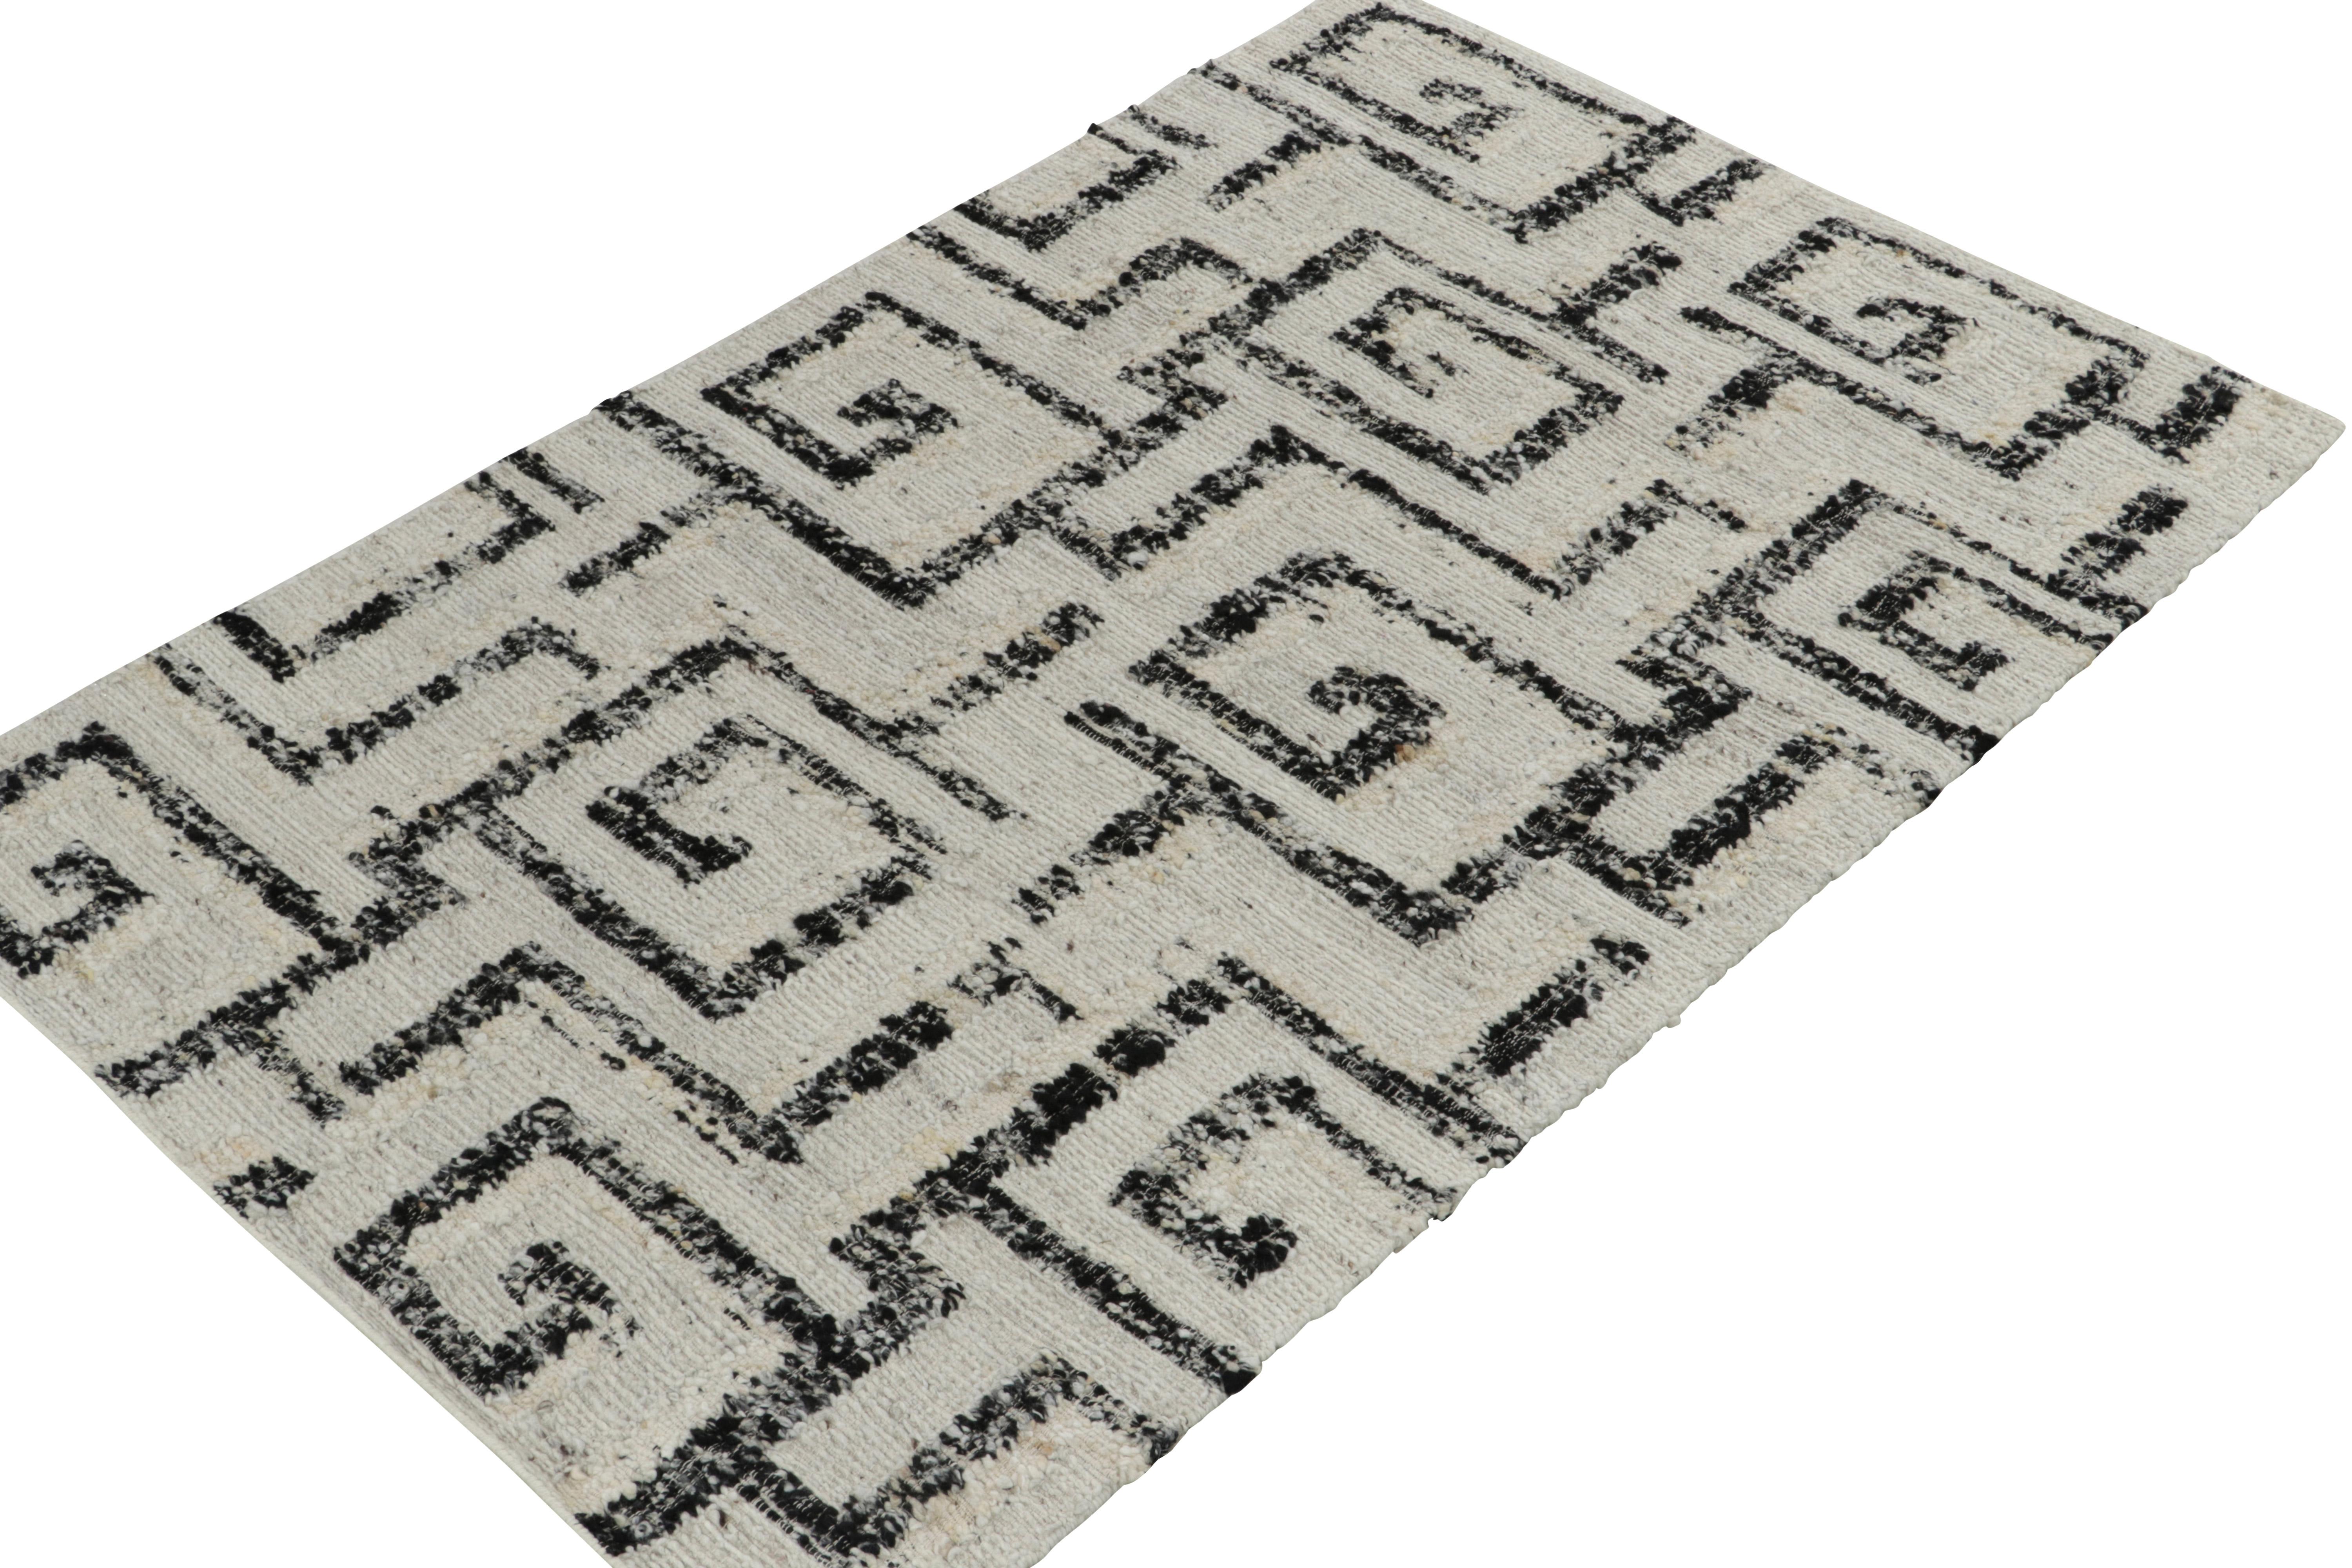 Rug & Kilim's Contemporary Kilim Teppich in Elfenbein, Charcoal Black Deco Pattern (Art déco) im Angebot